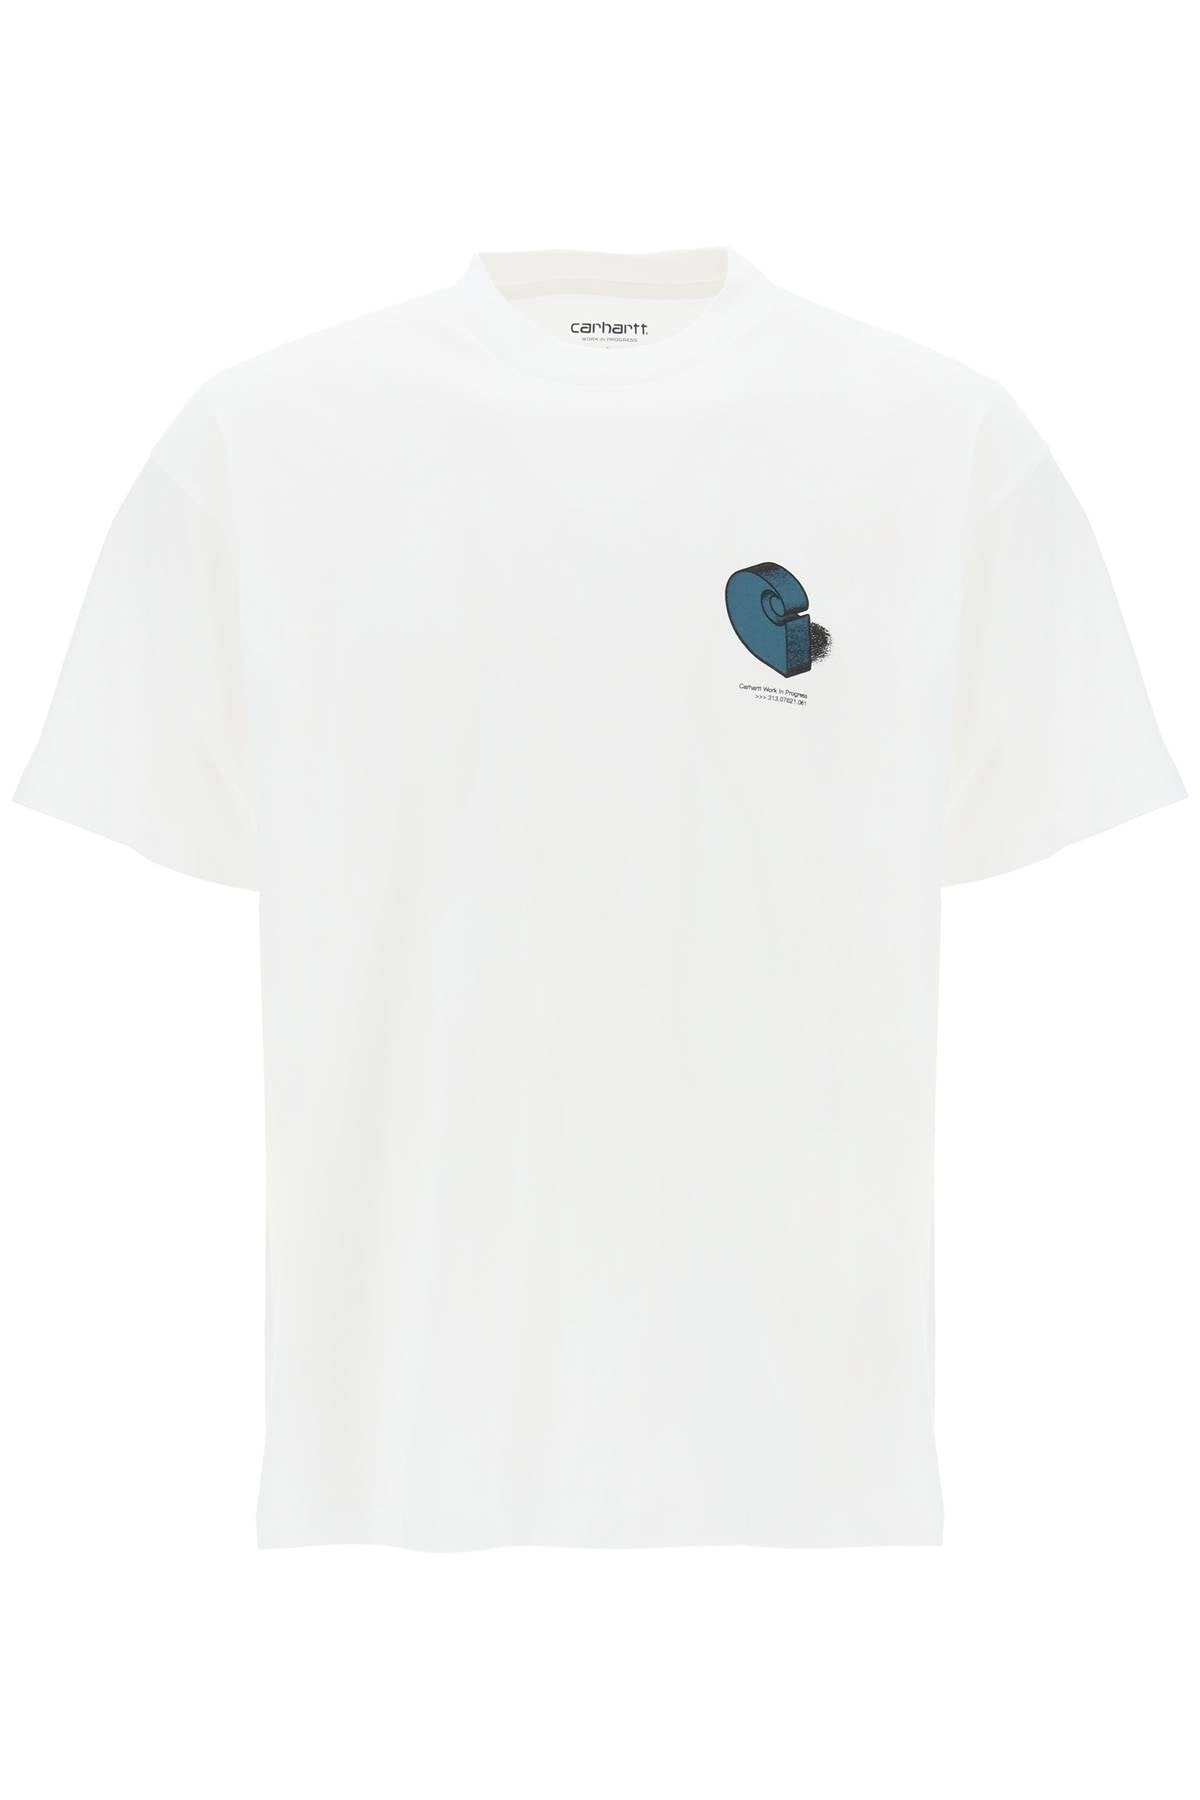 Carhartt wip round neck t-shirt diagram-0